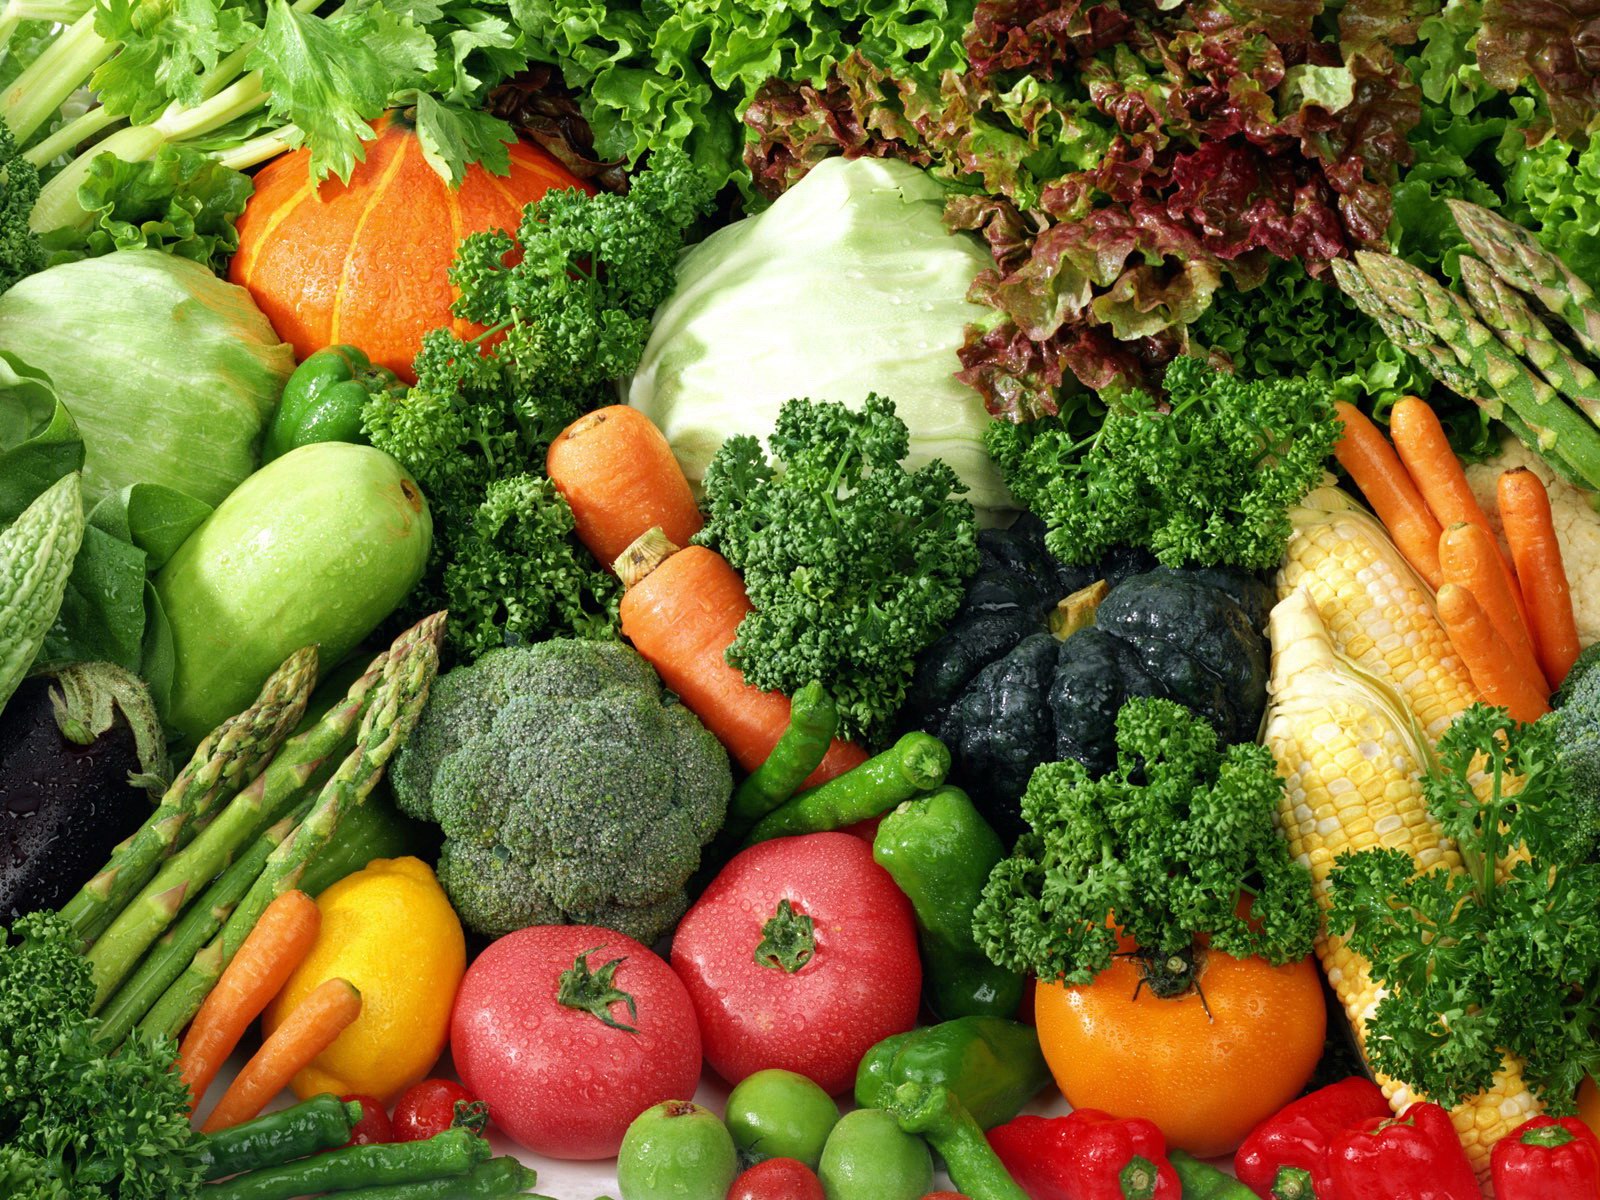 Organic, Pesticide-Free, and Hydroponic Veggies | noelsutabutr
